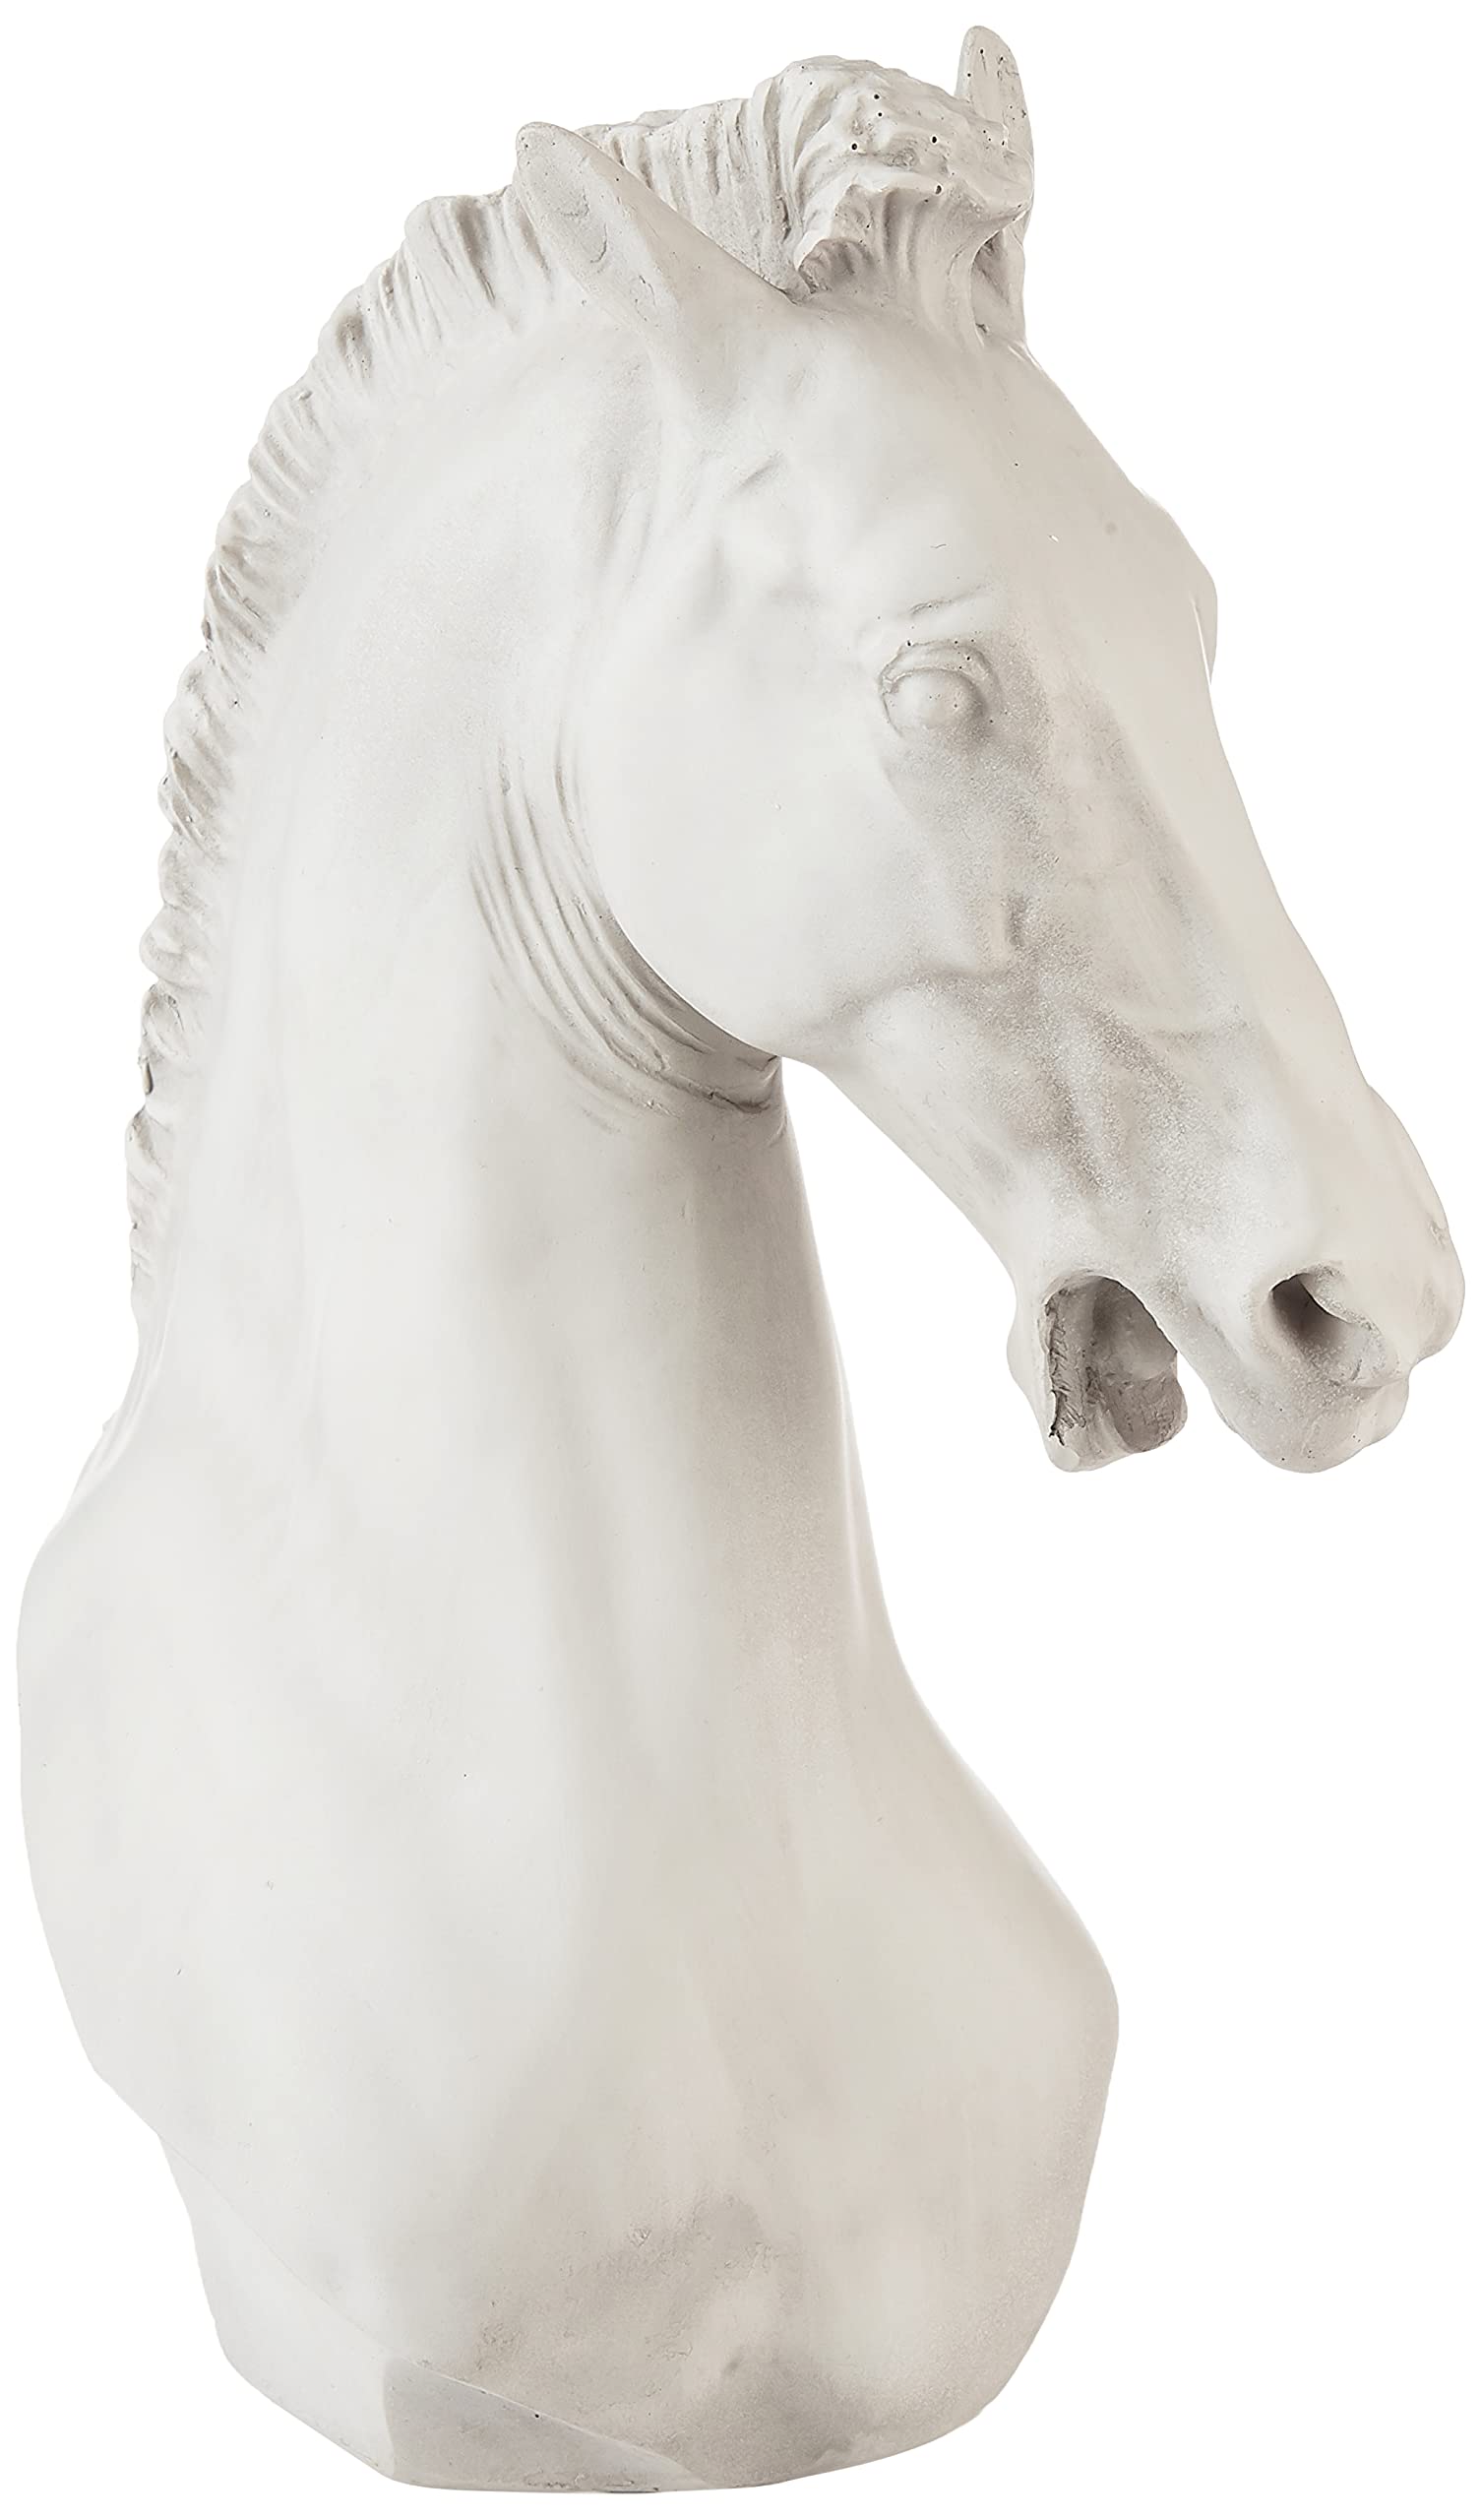 Design Toscano NG32787 Horse of Turino Sculpture,Single